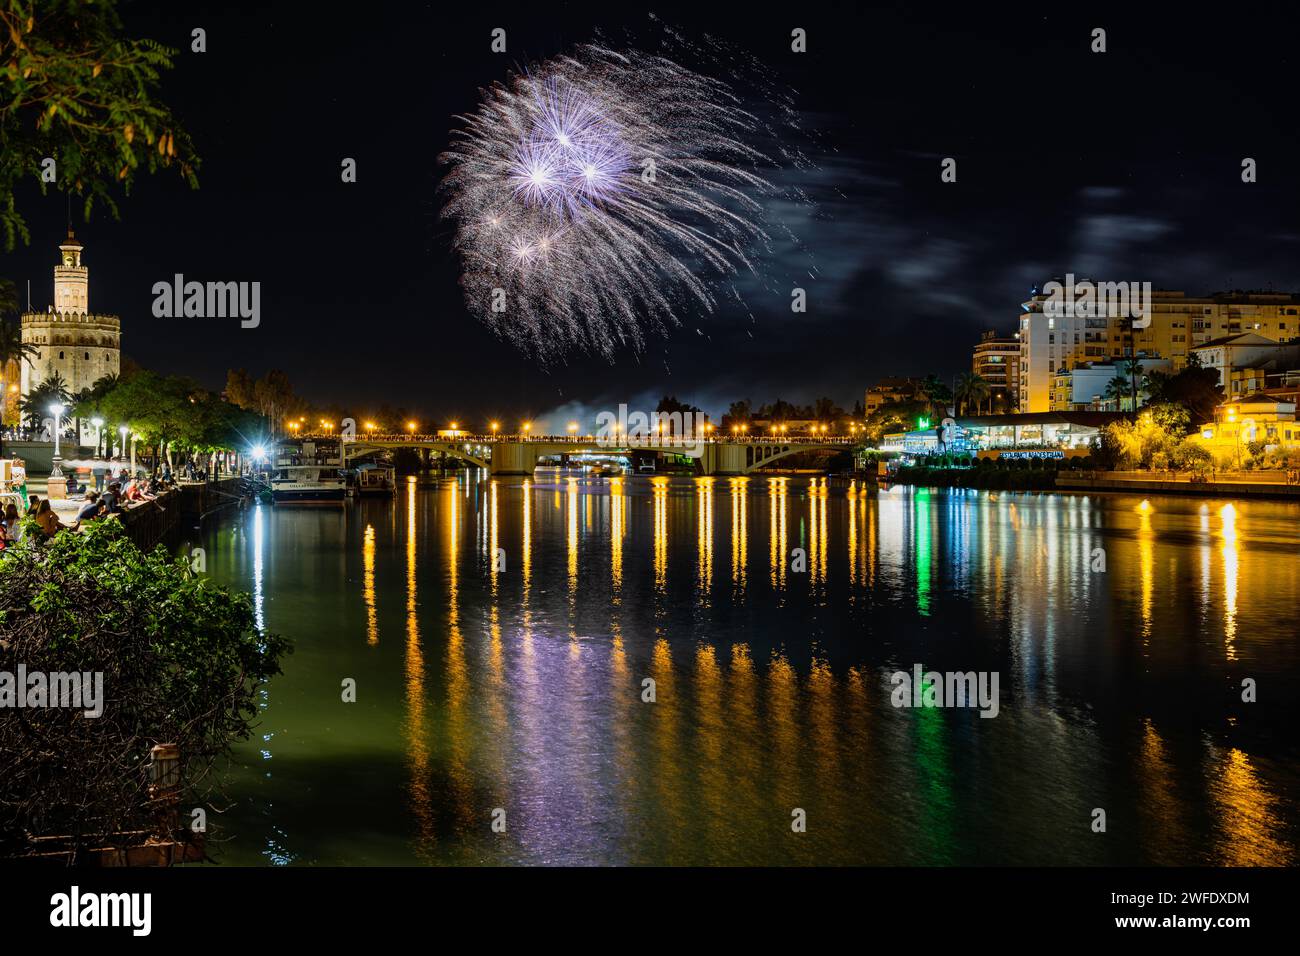 Feuerwerk Ende April Feria, Sevilla, Spanien Stockfoto